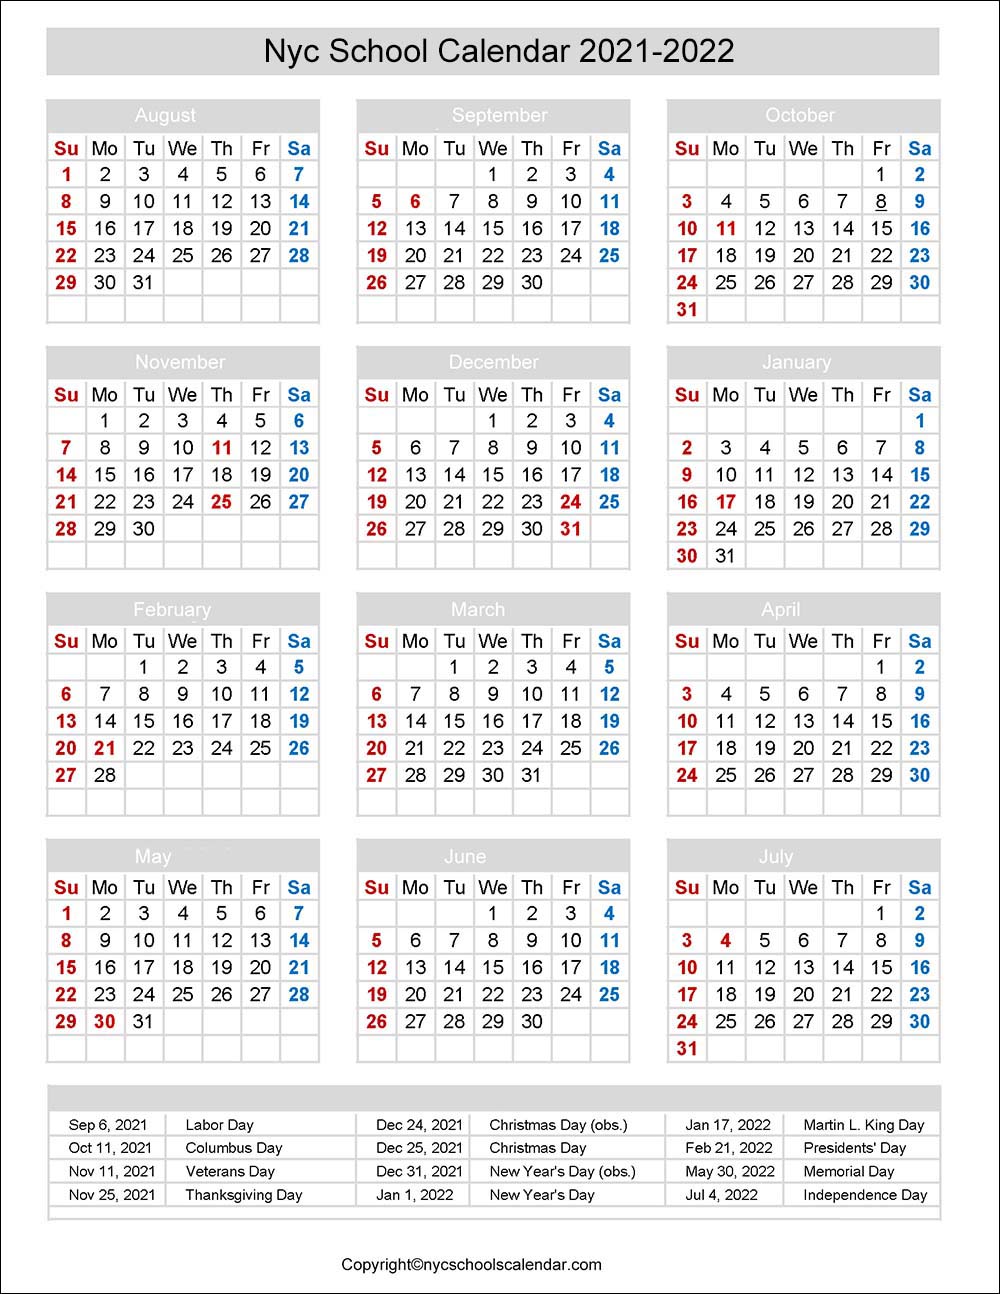 Rpi Academic Calendar 2021 2022 February 2021